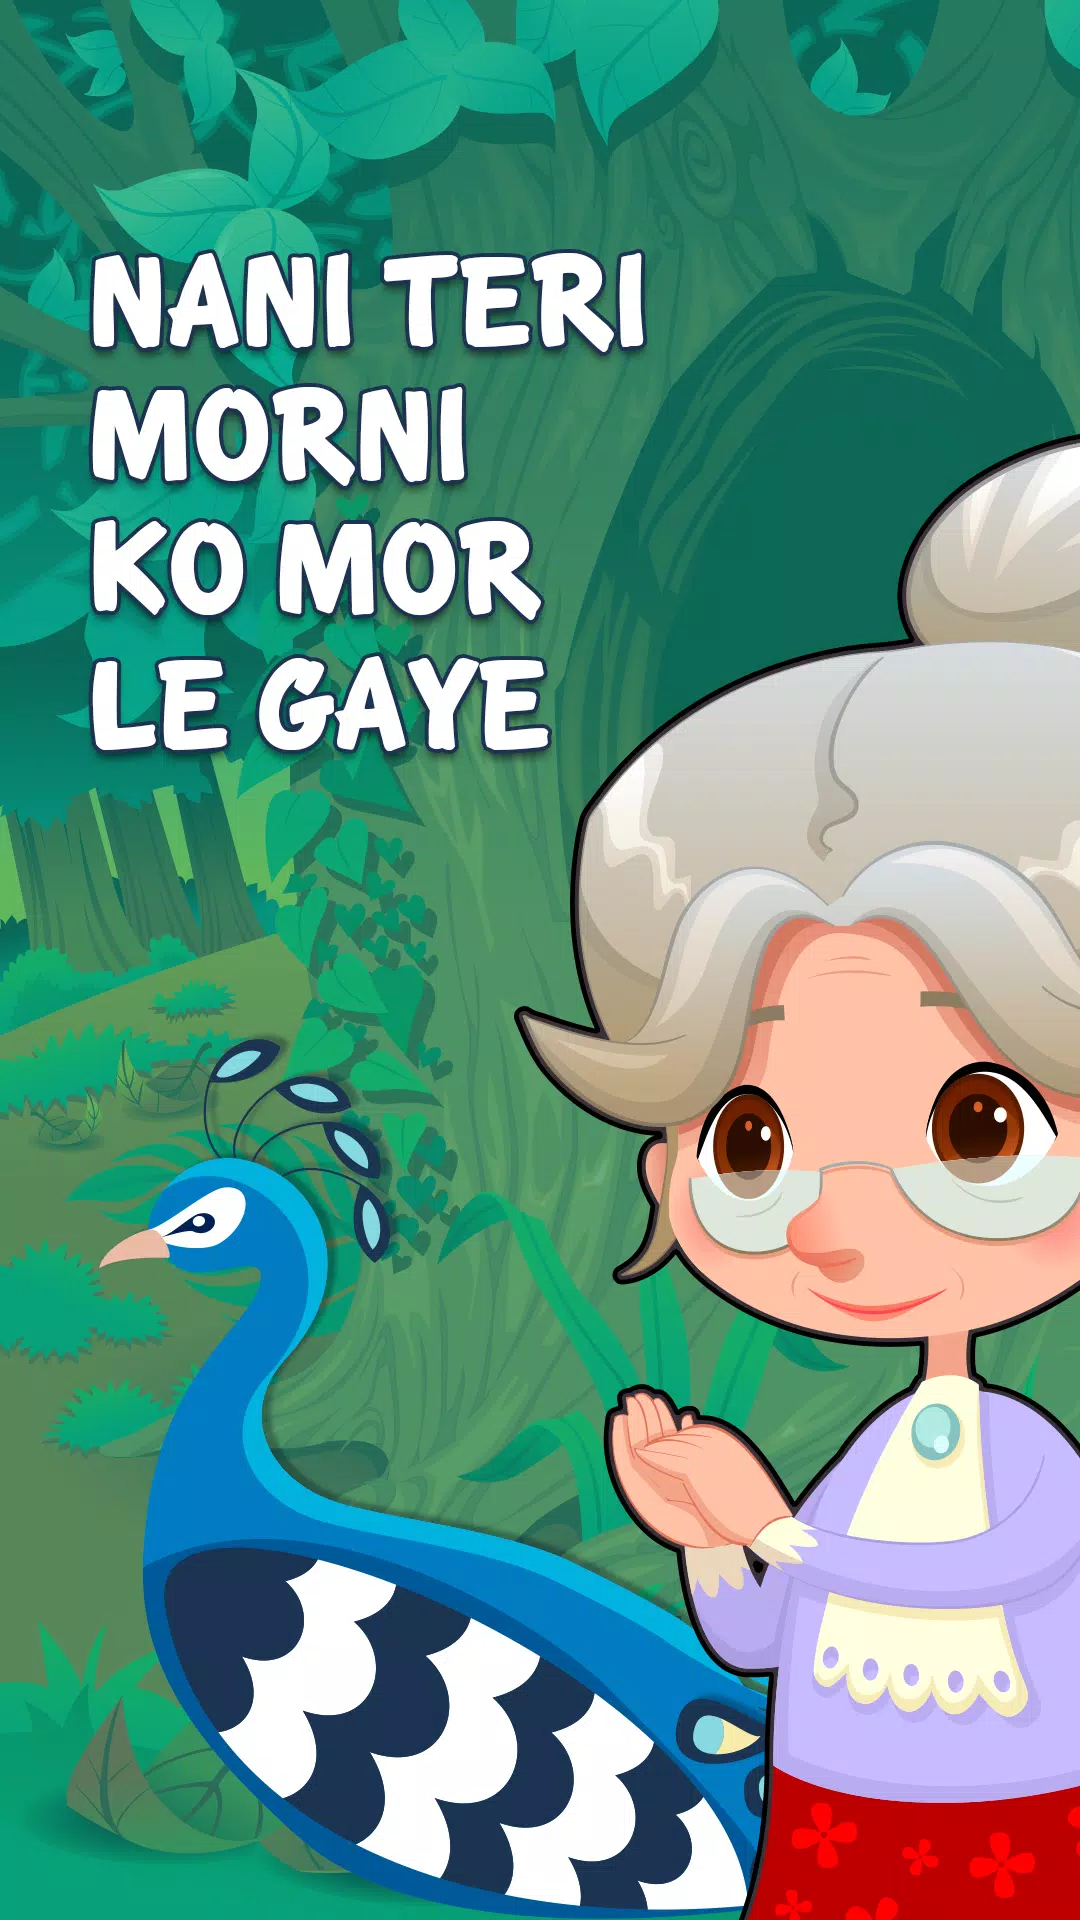 Nani Teri Morni Ko Mor Le Gaye - Hindi Poem APK pour Android Télécharger